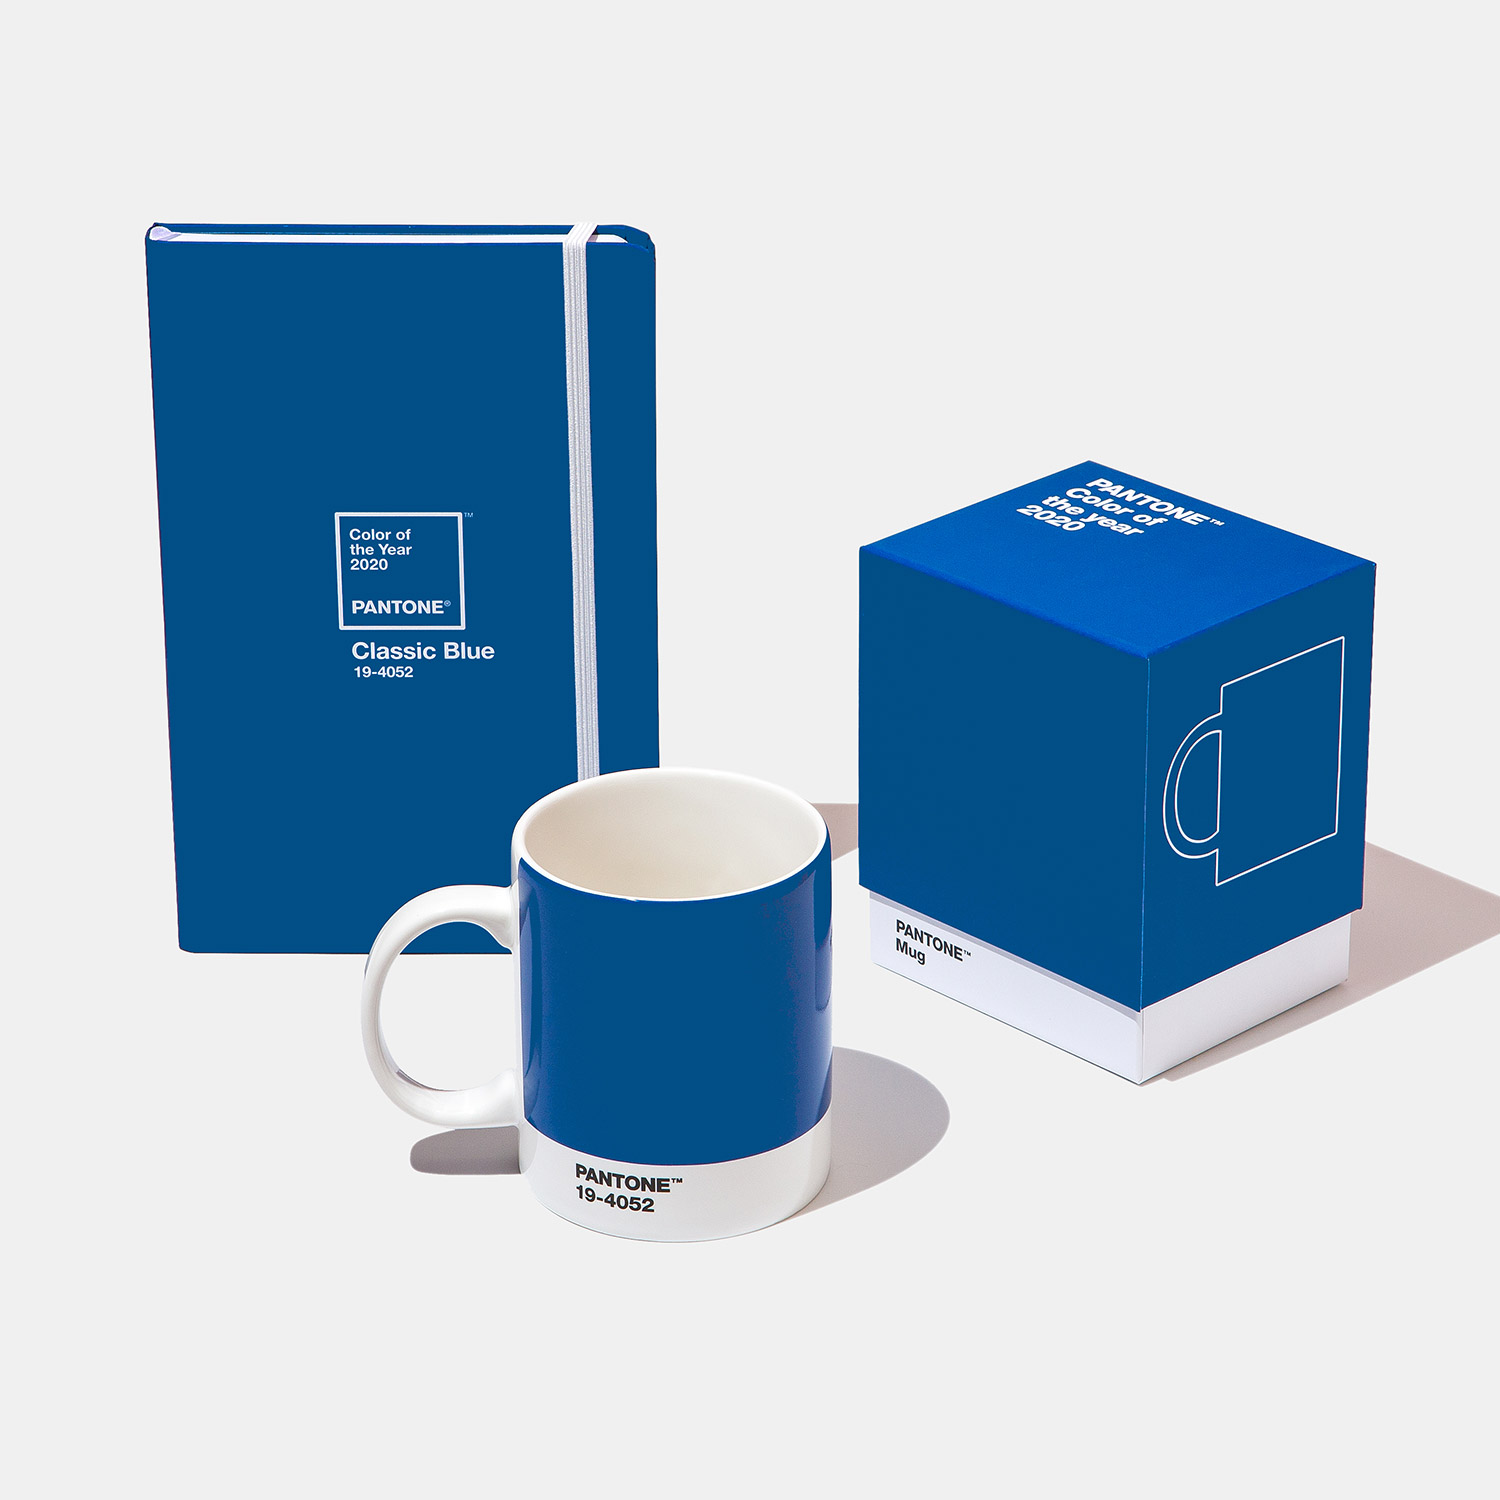 Pantone Limited Edition Set, Pantone Color of the Year 2020 Classic Blue Mug & Journal PANTONE 19-4052 Classic Blue - View 1